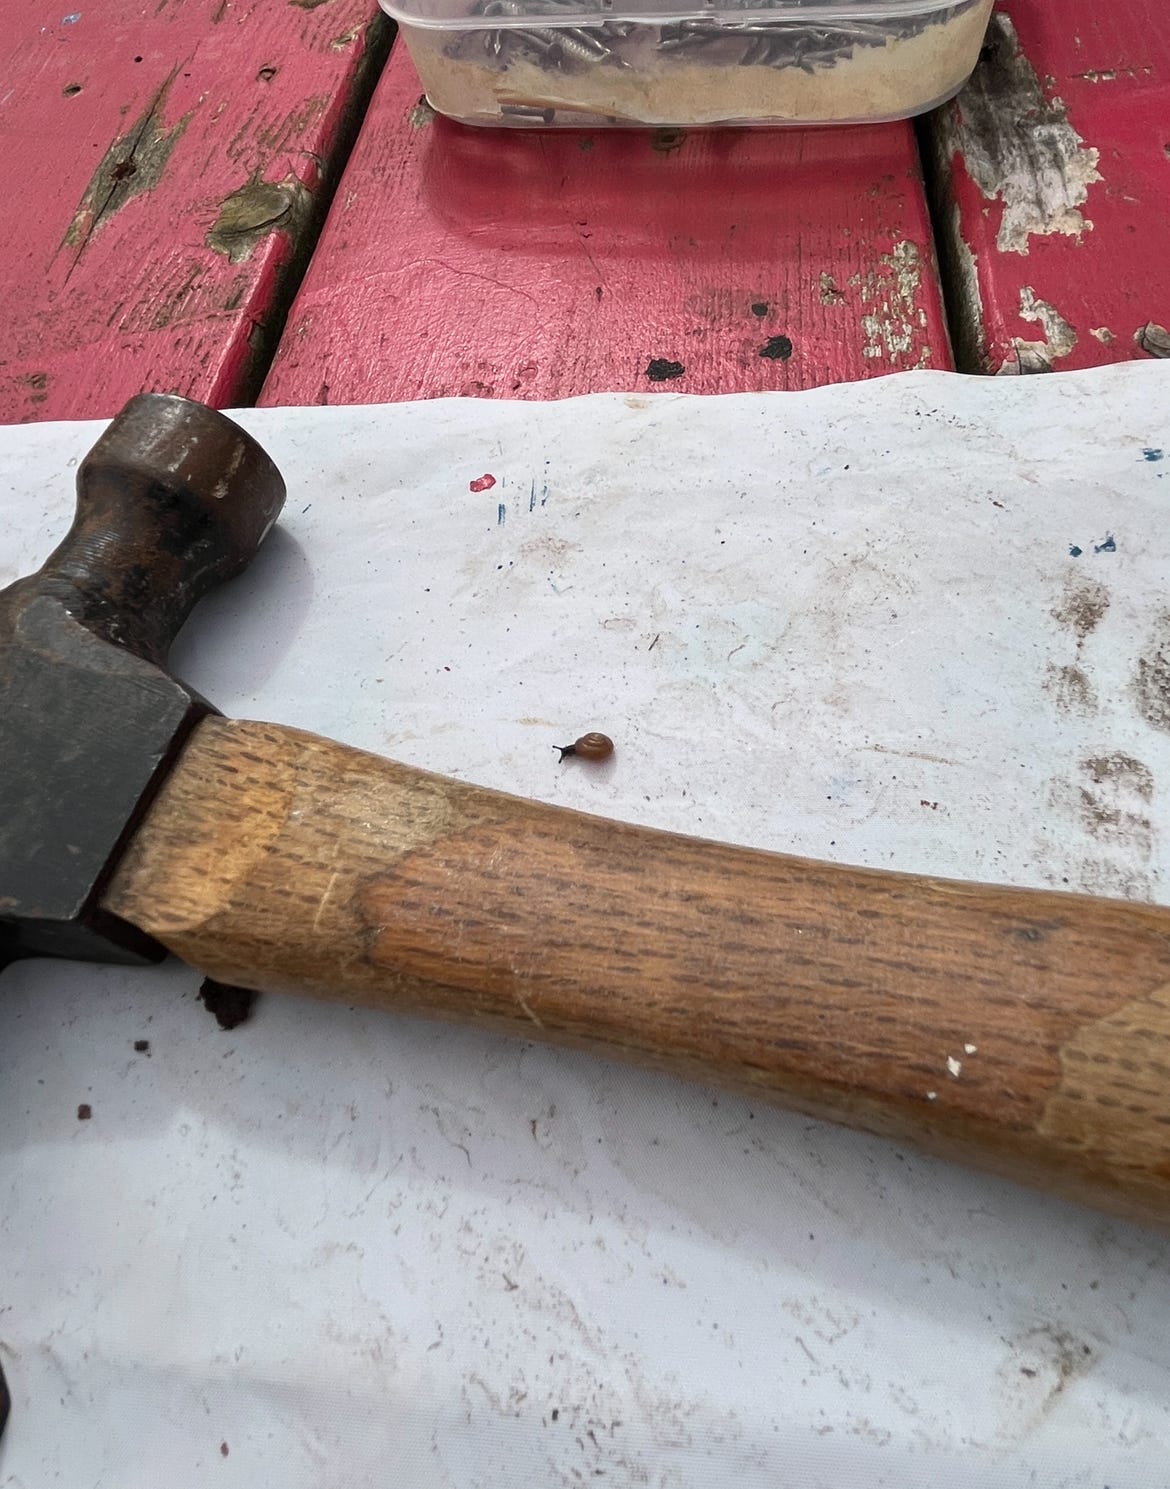 A hammer sitting on my work bench. A tiny snailv sits beside it.